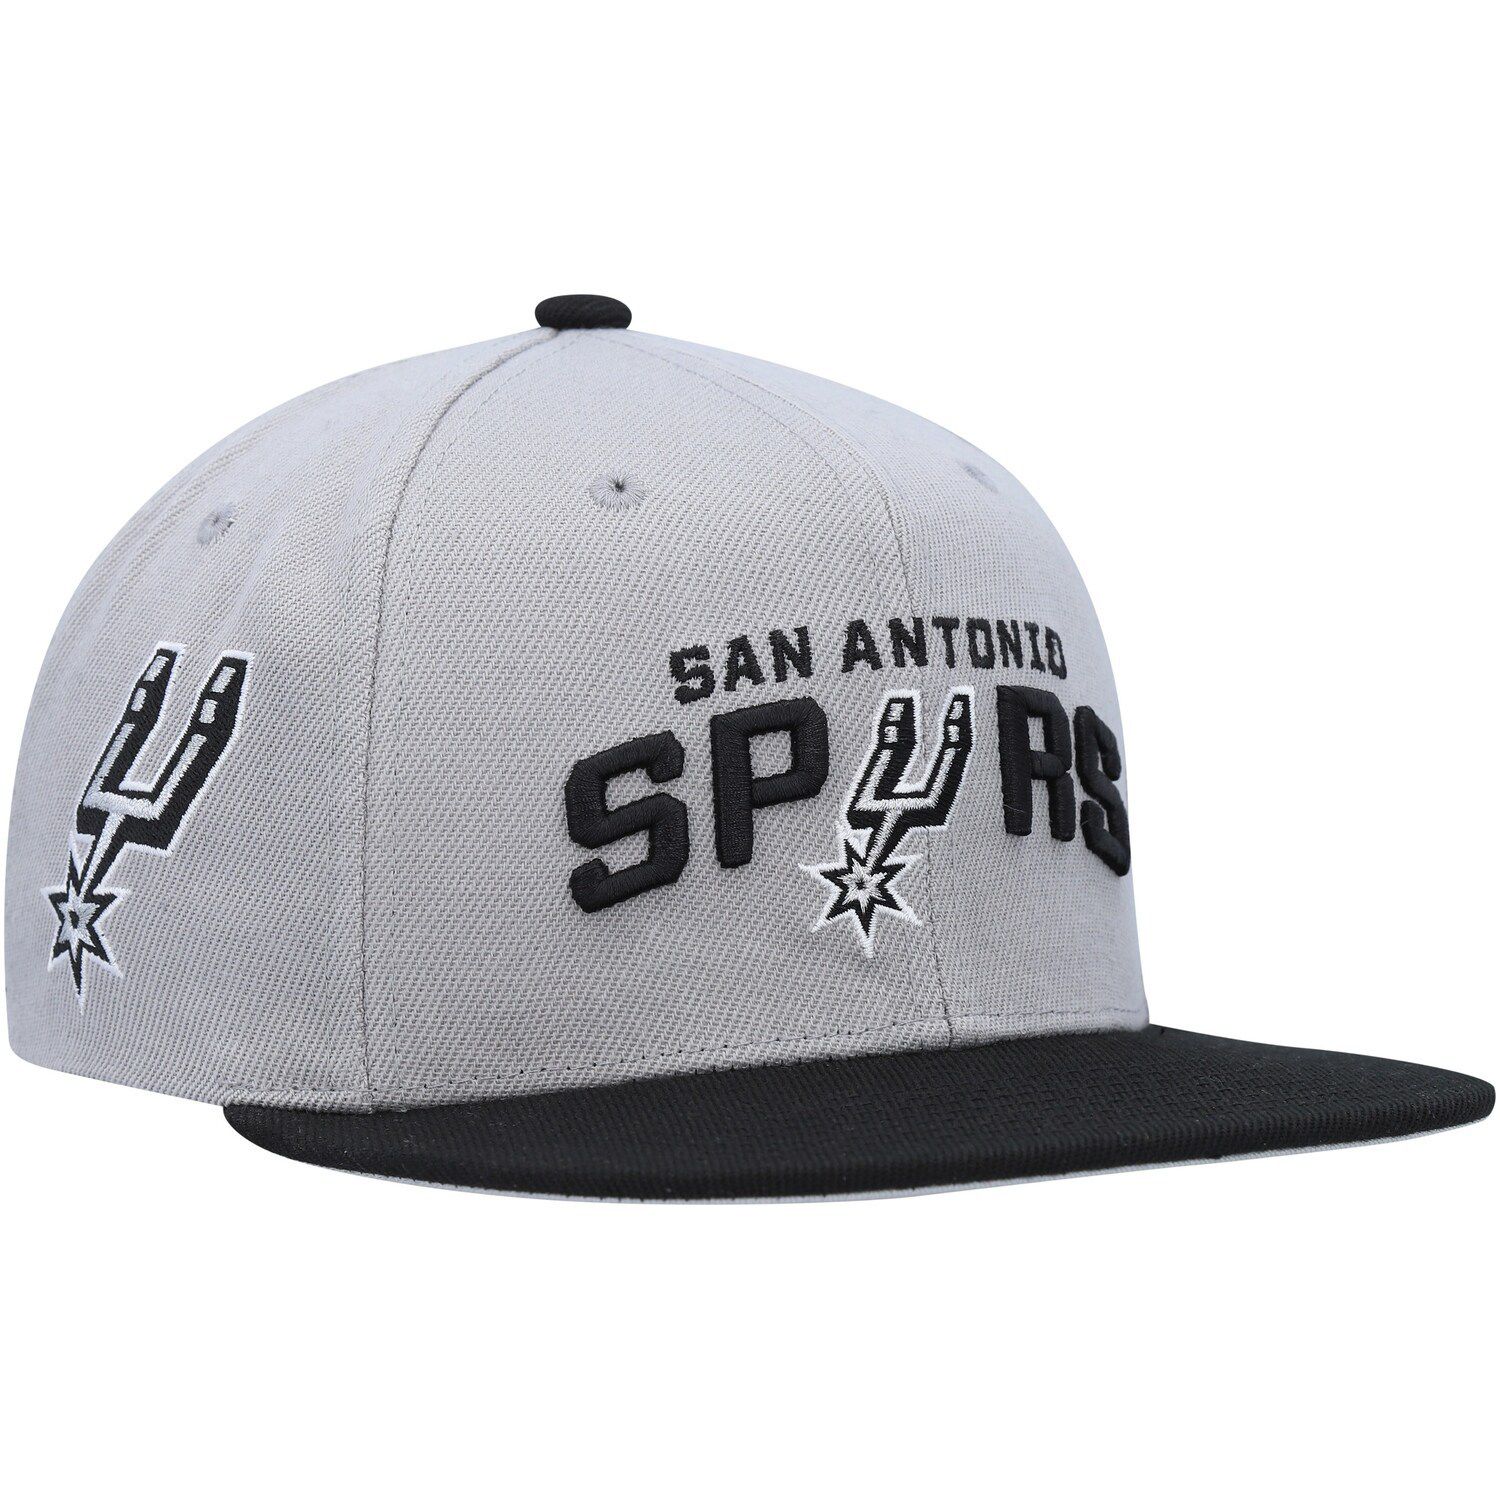 New Era Men's Black, White San Antonio Spurs Griswold 59FIFTY